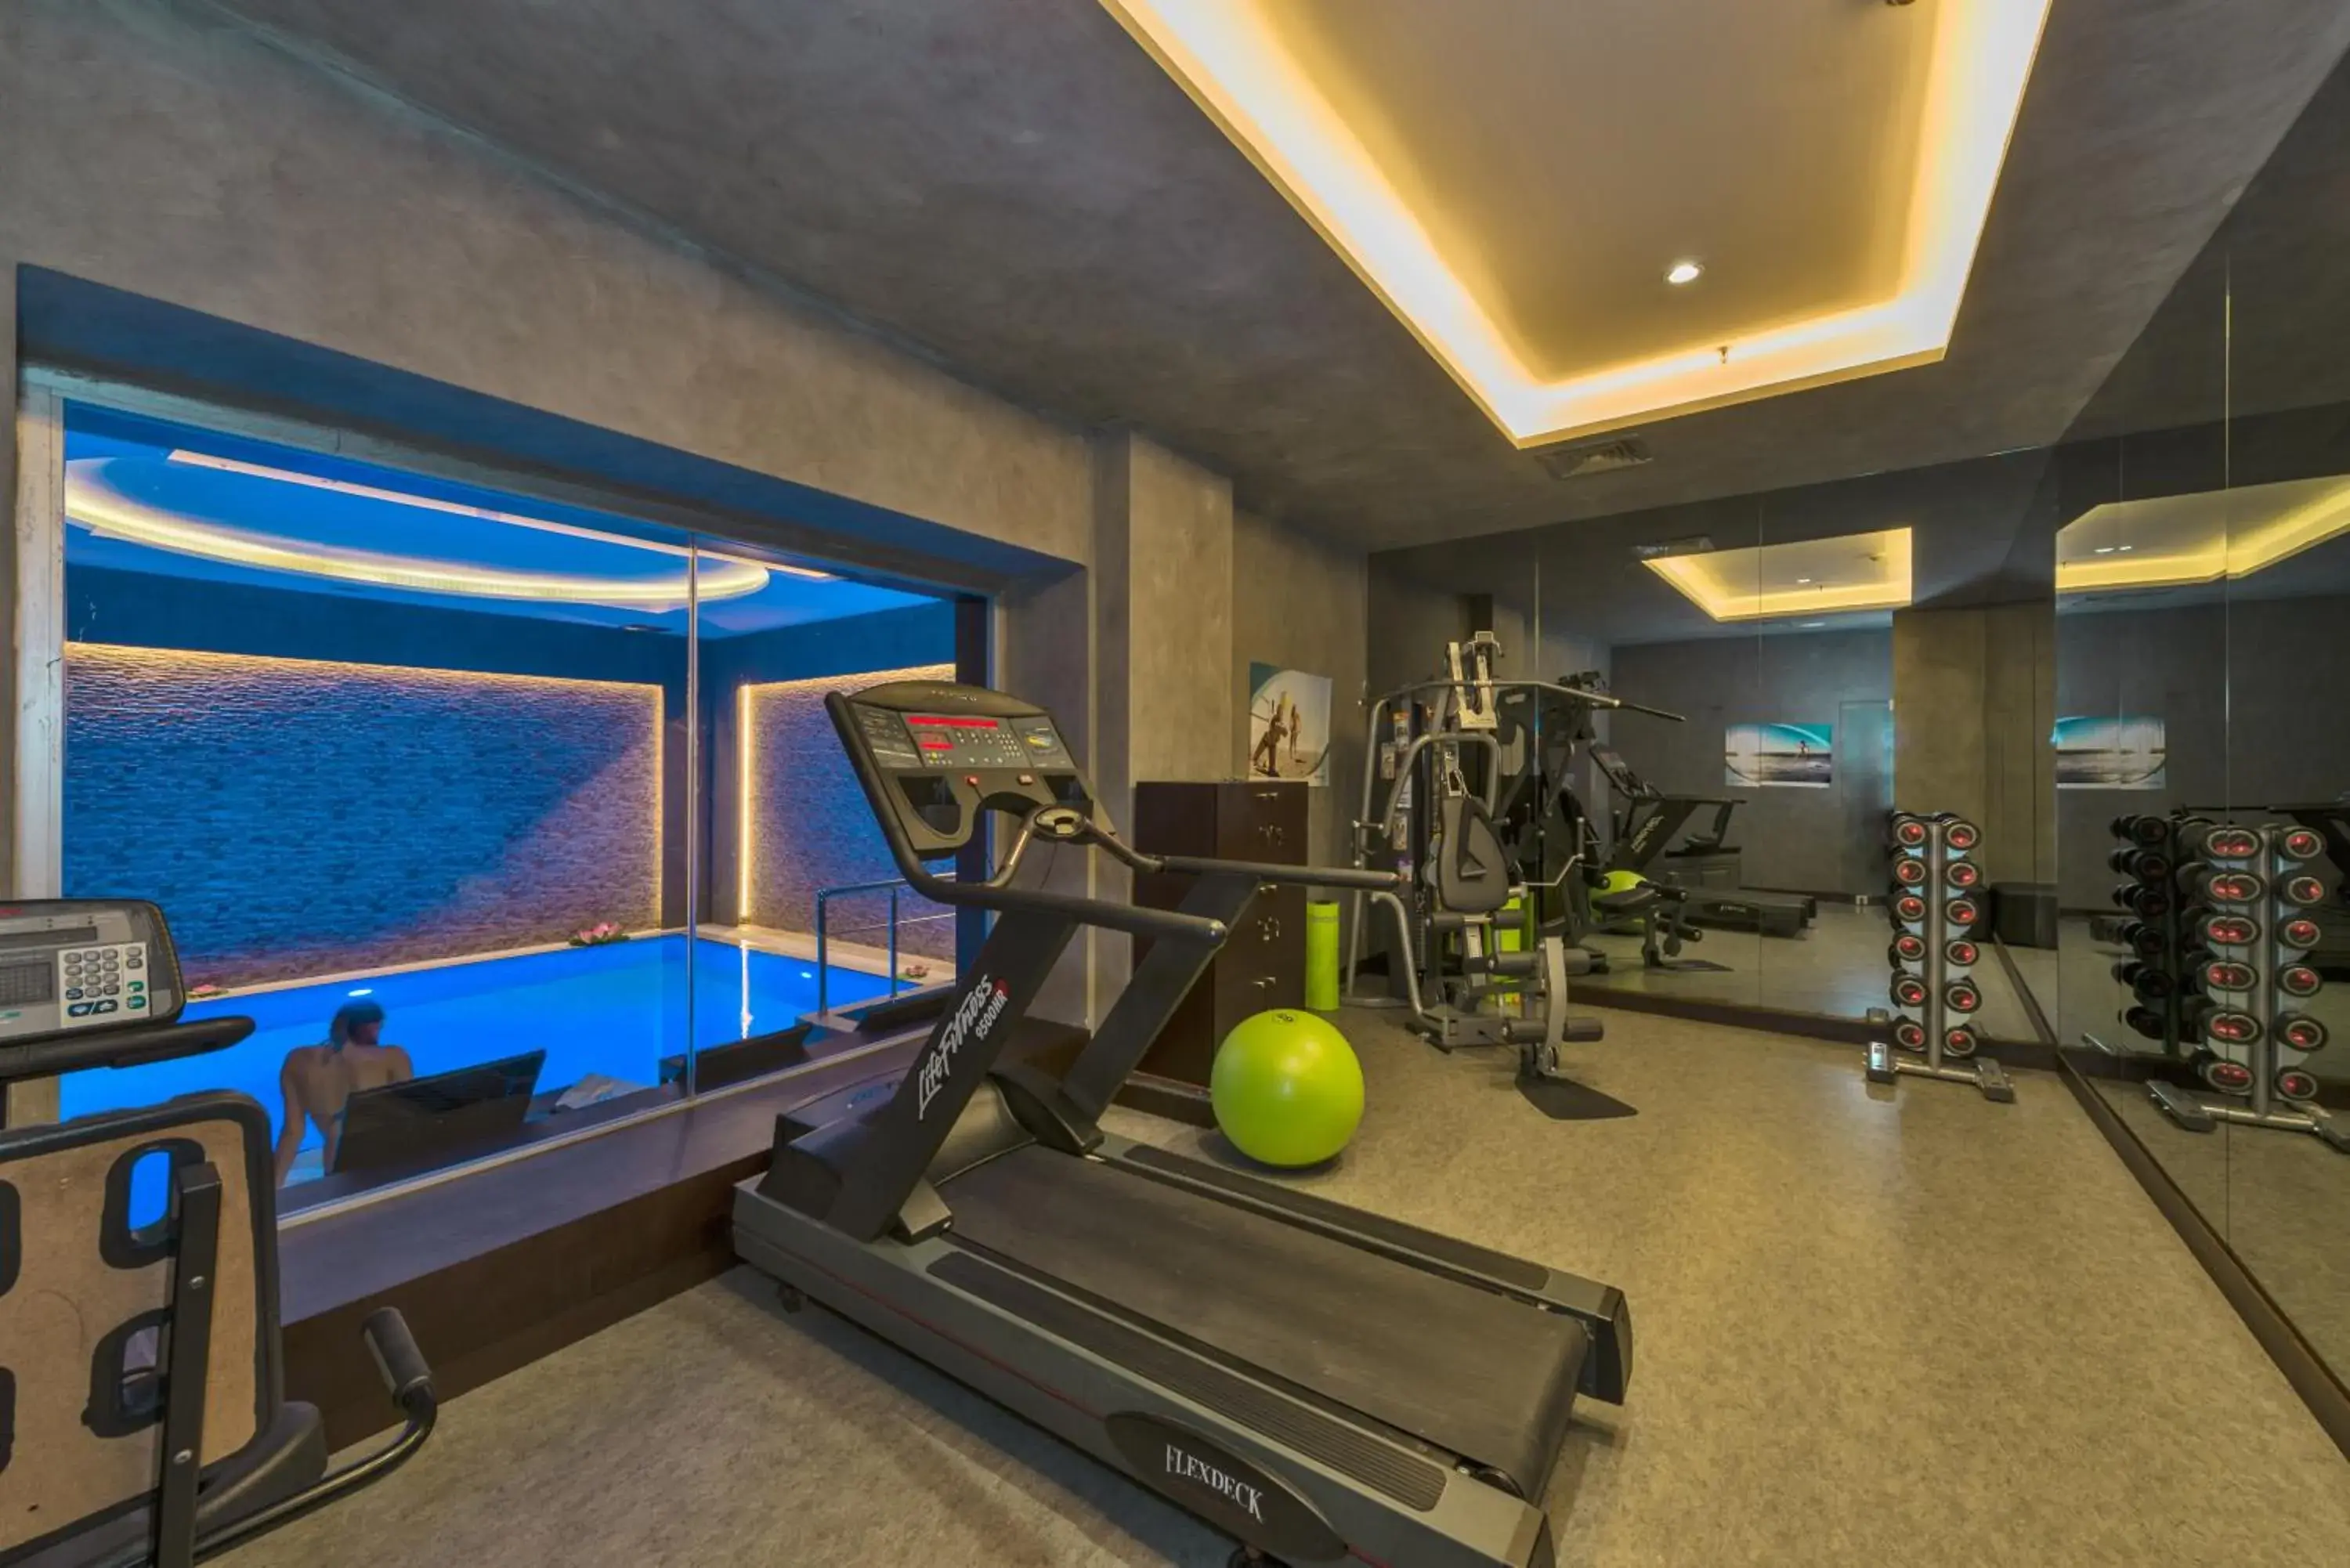 Fitness centre/facilities, Fitness Center/Facilities in Avantgarde Taksim Hotel